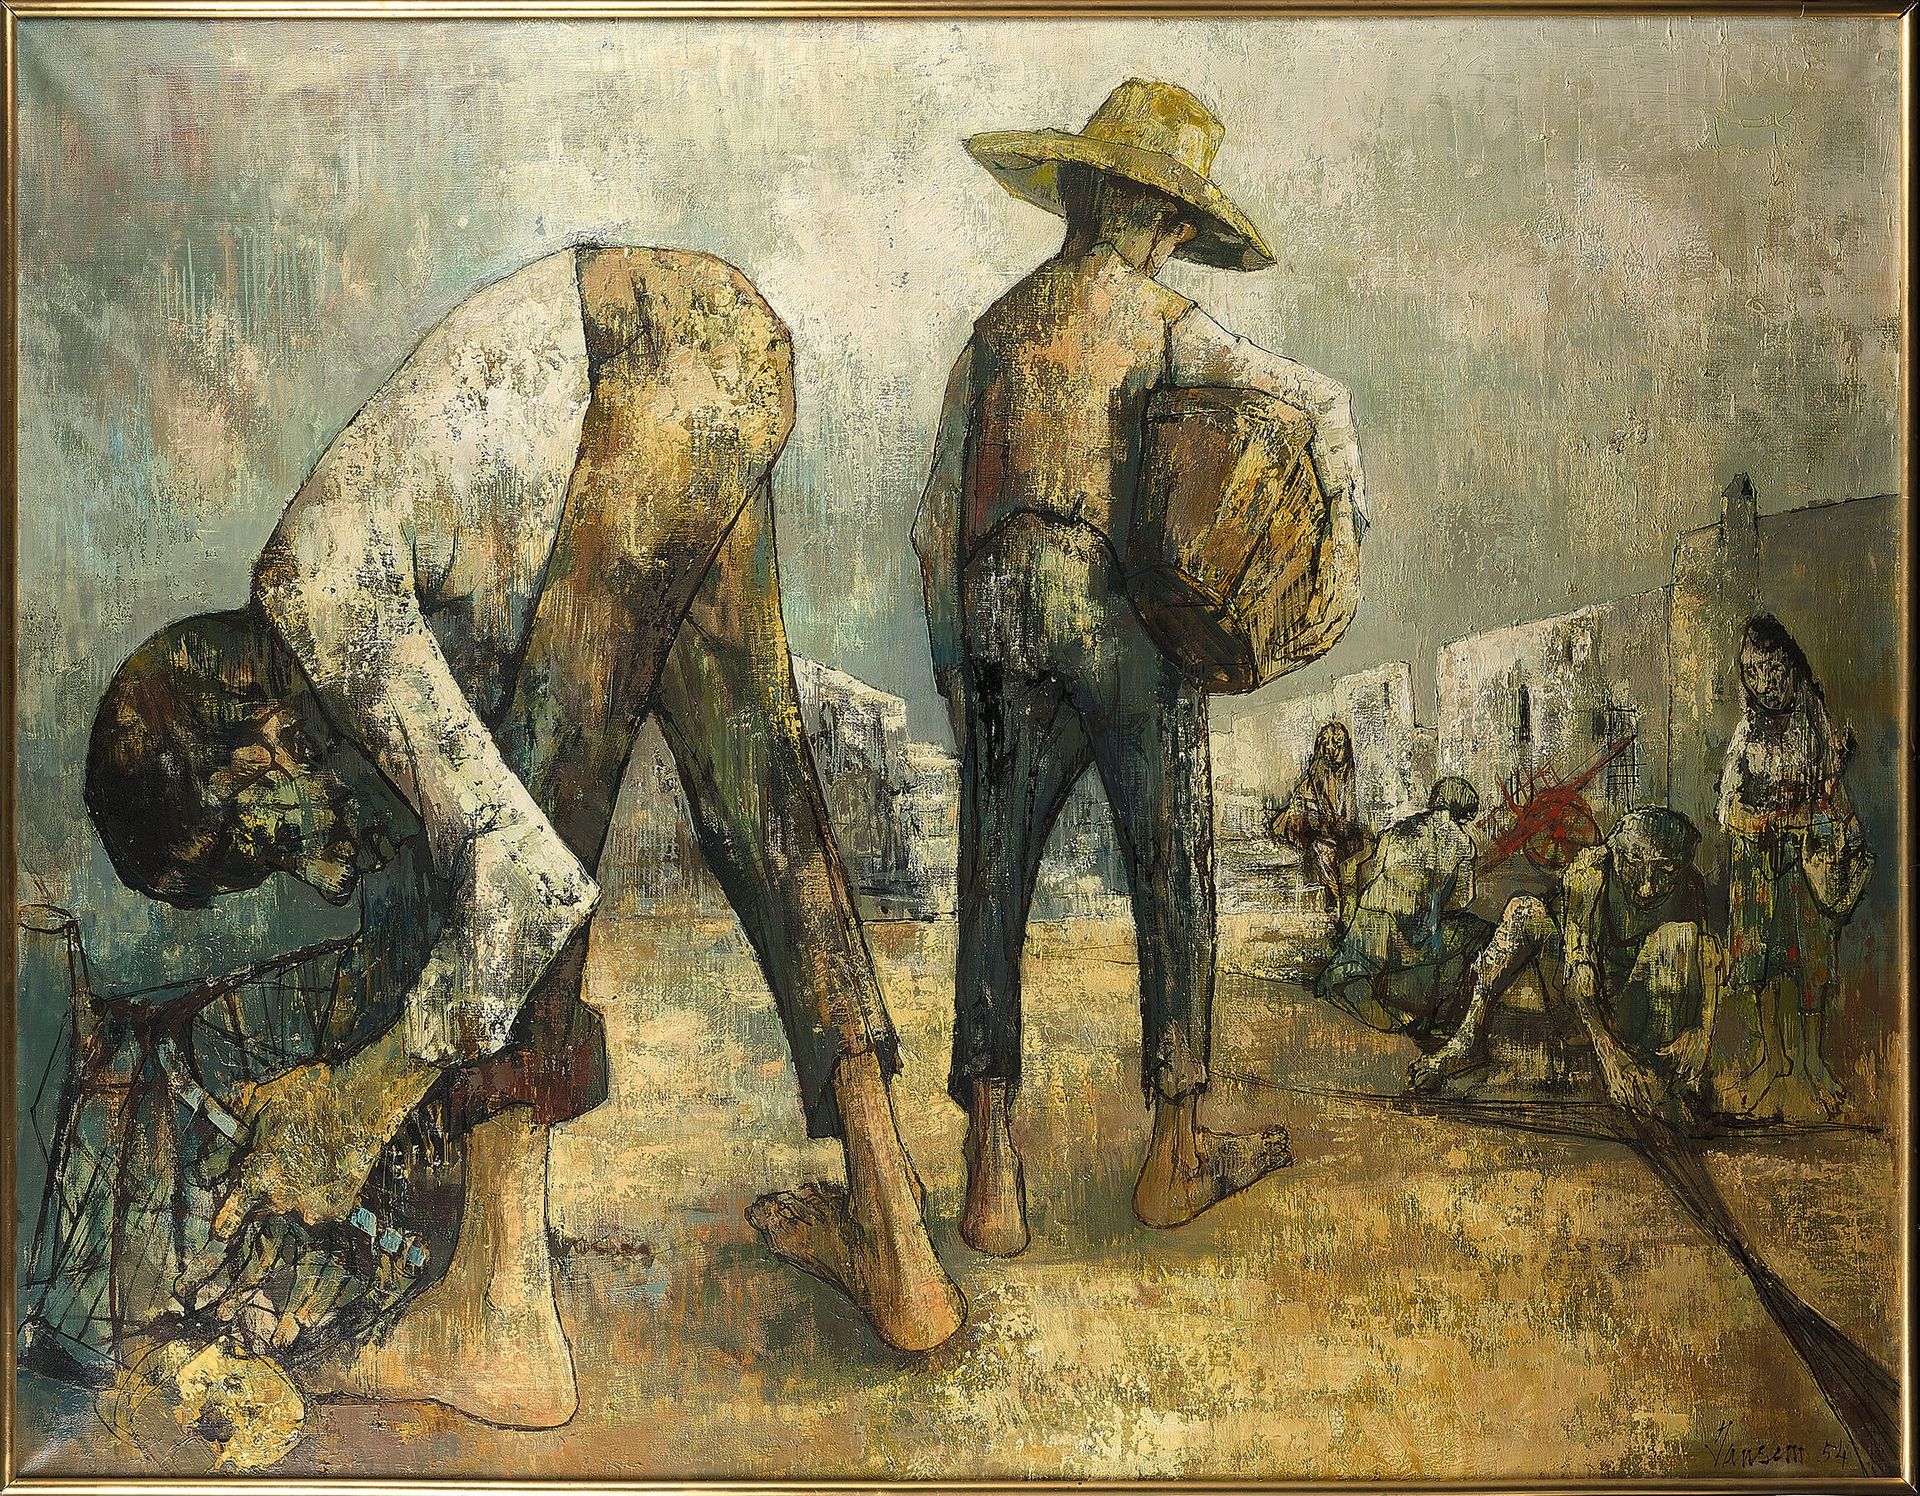 Null 让-詹森 (1920-2013)
捕鱼归来, 1954
布面油画，右下方有签名和日期54。
113 x 146,5 cm